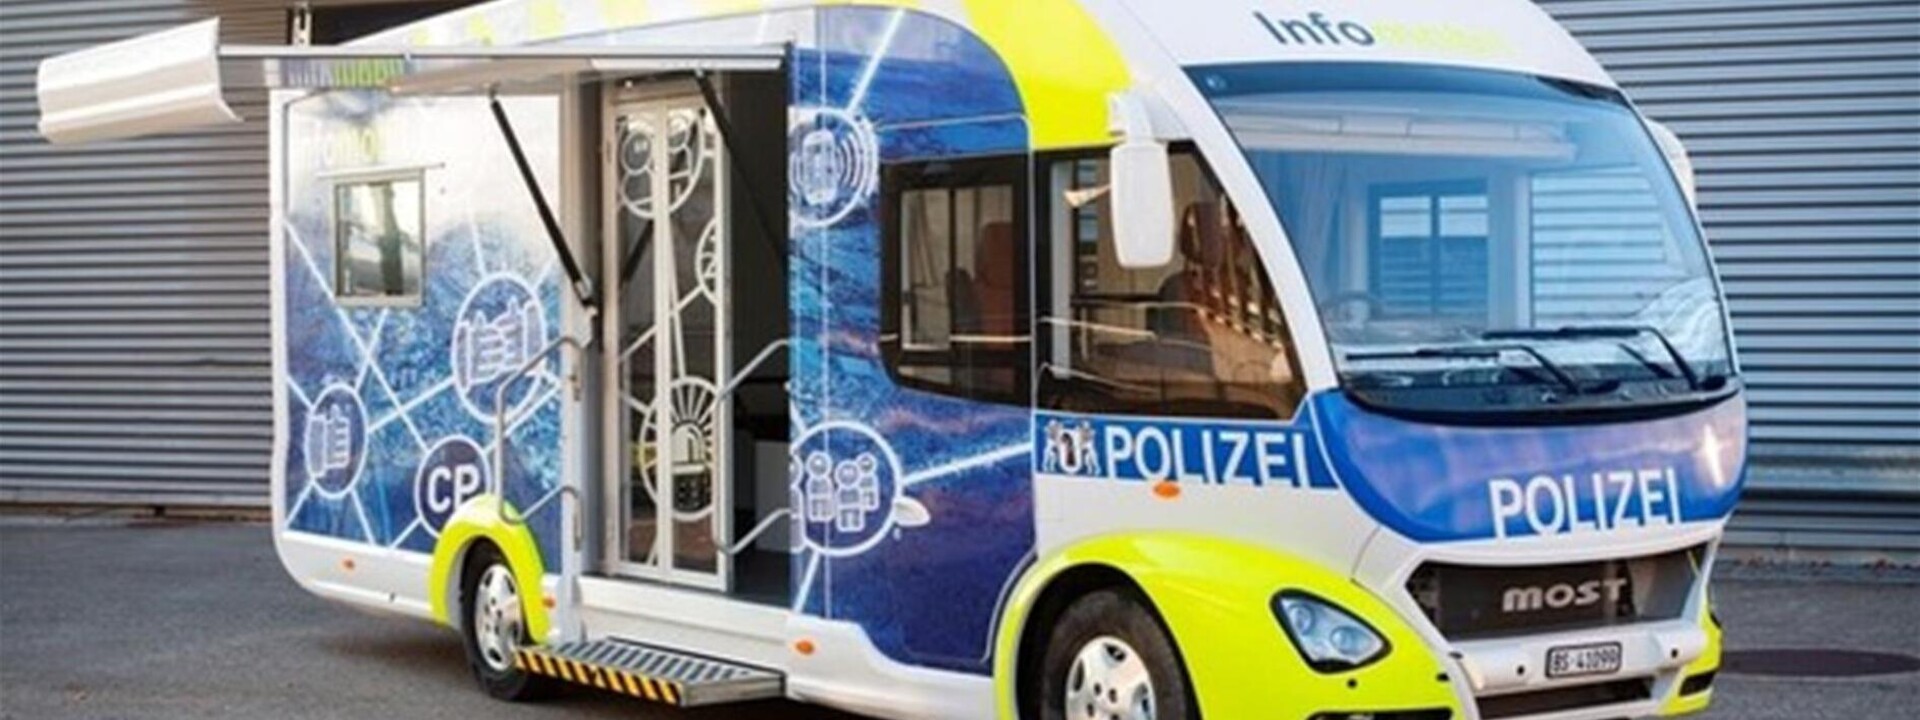 Polizei-Spacebus1-s.jpg